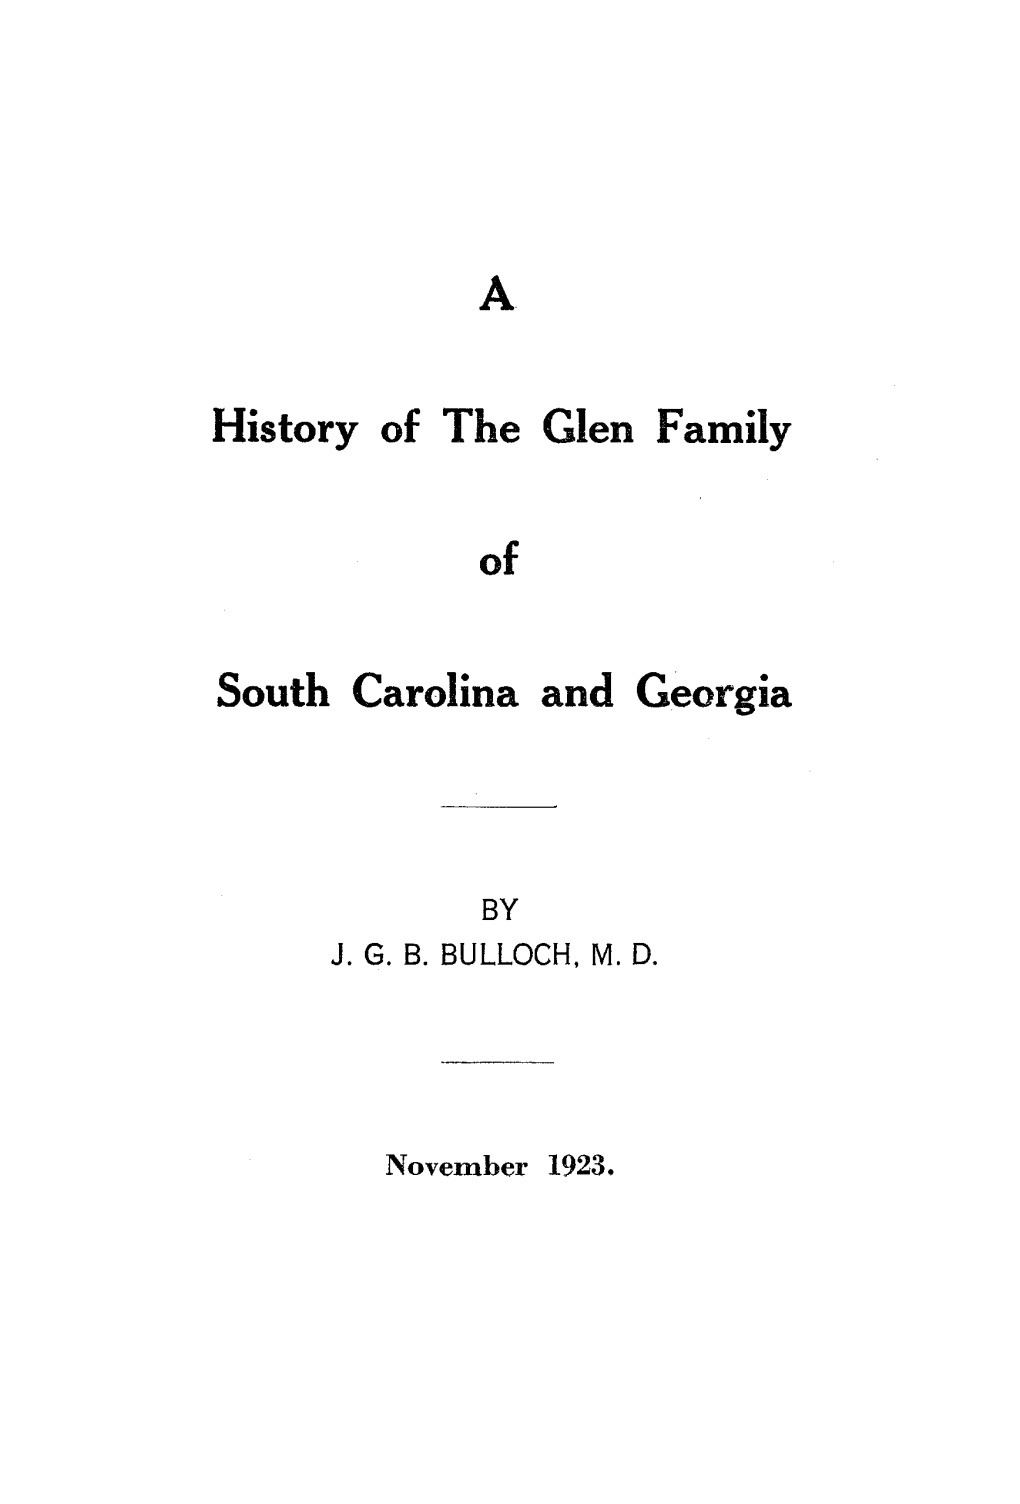 History of the Glen Family of South Carolina and Georgia